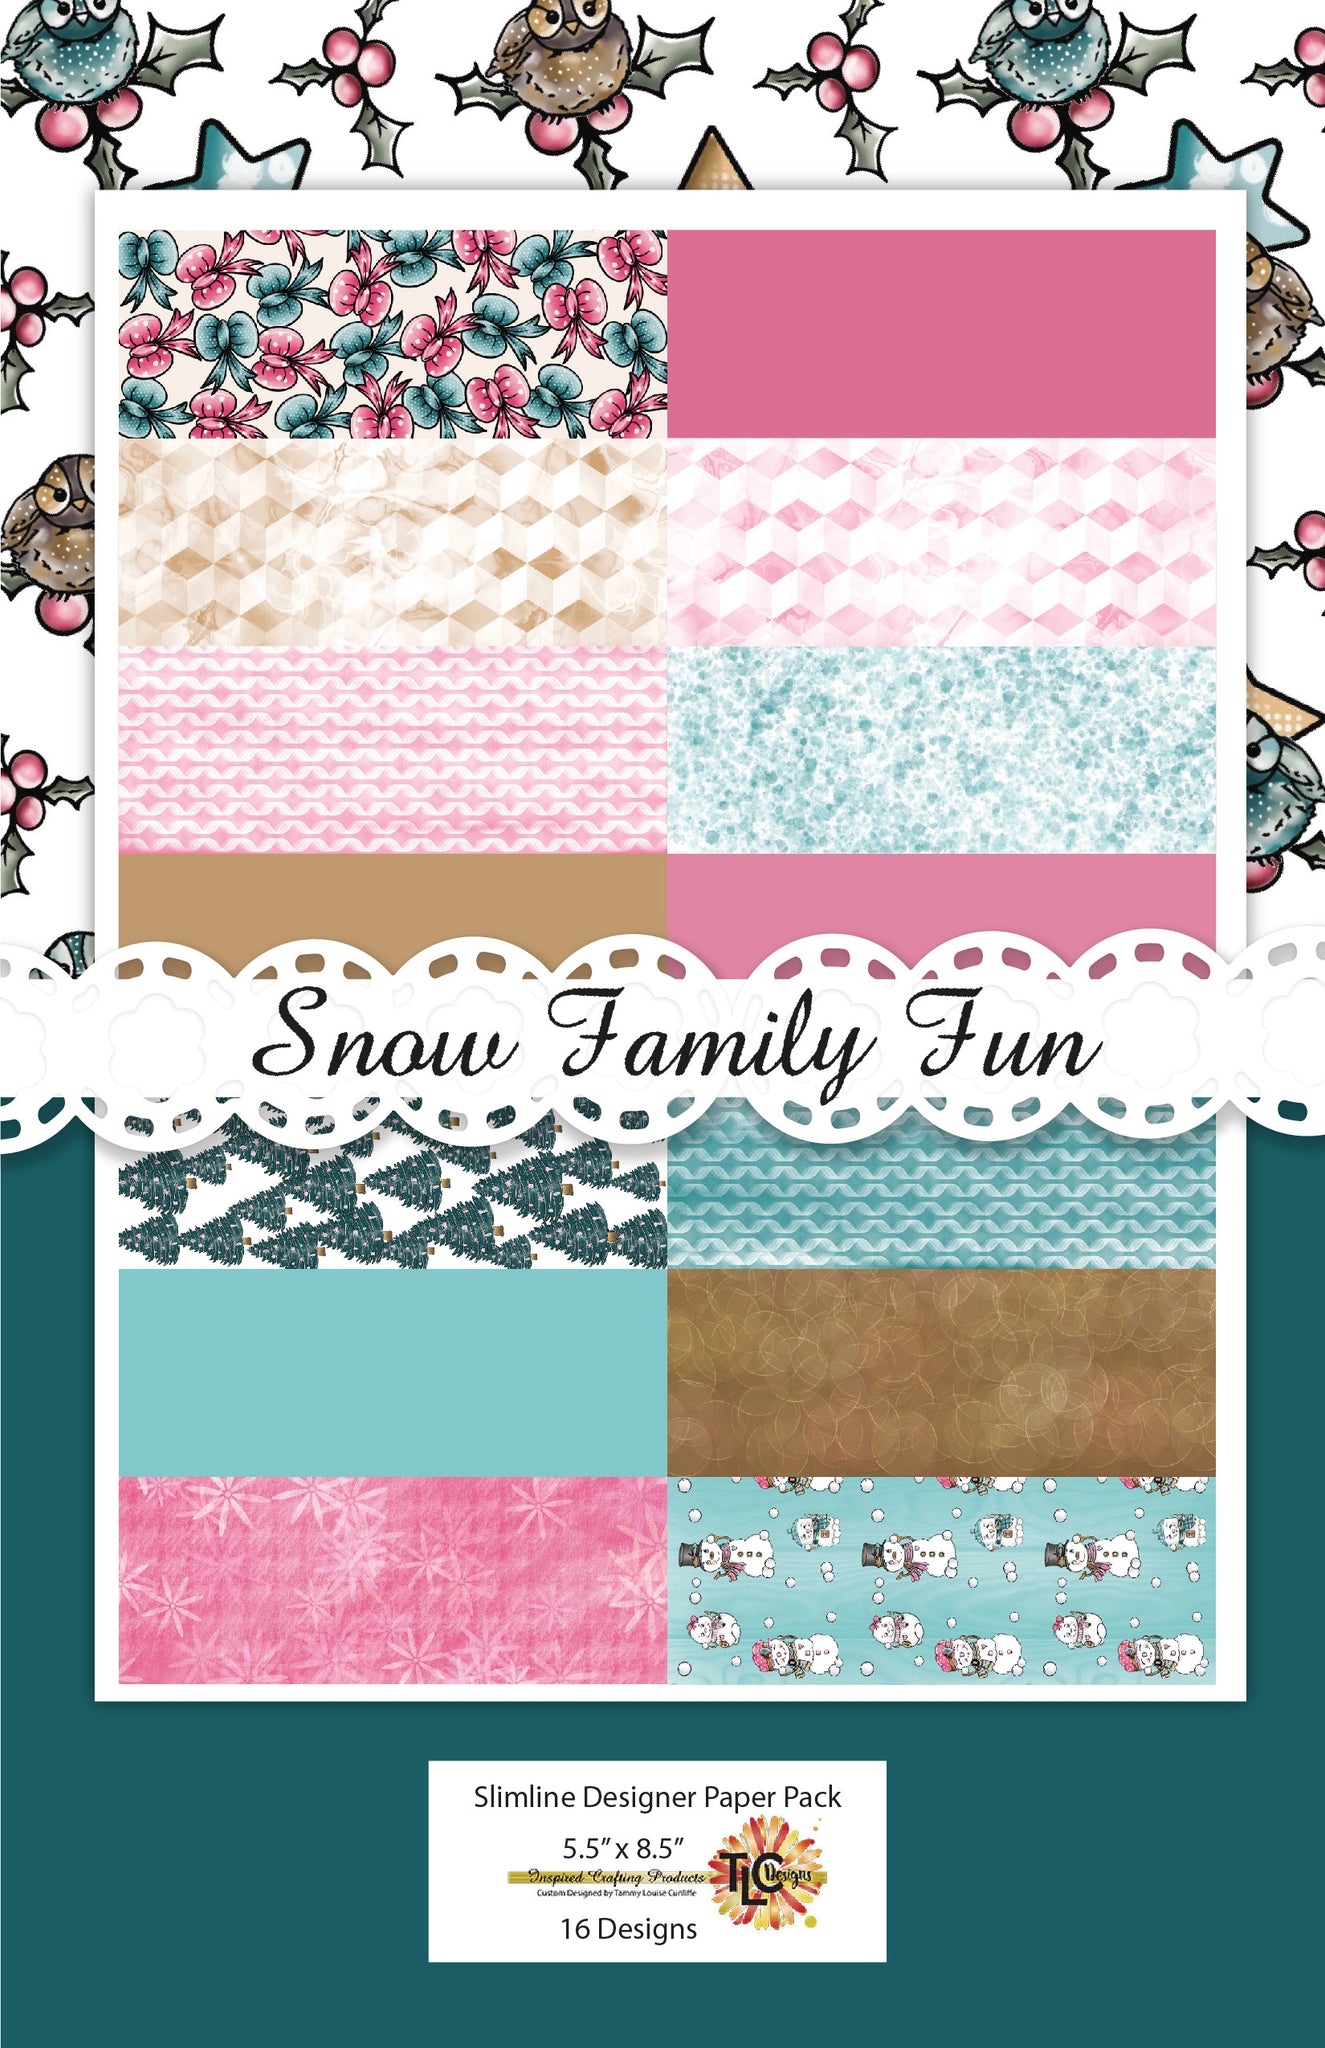 Snow Family Fun Slimline Stock Paper Pack